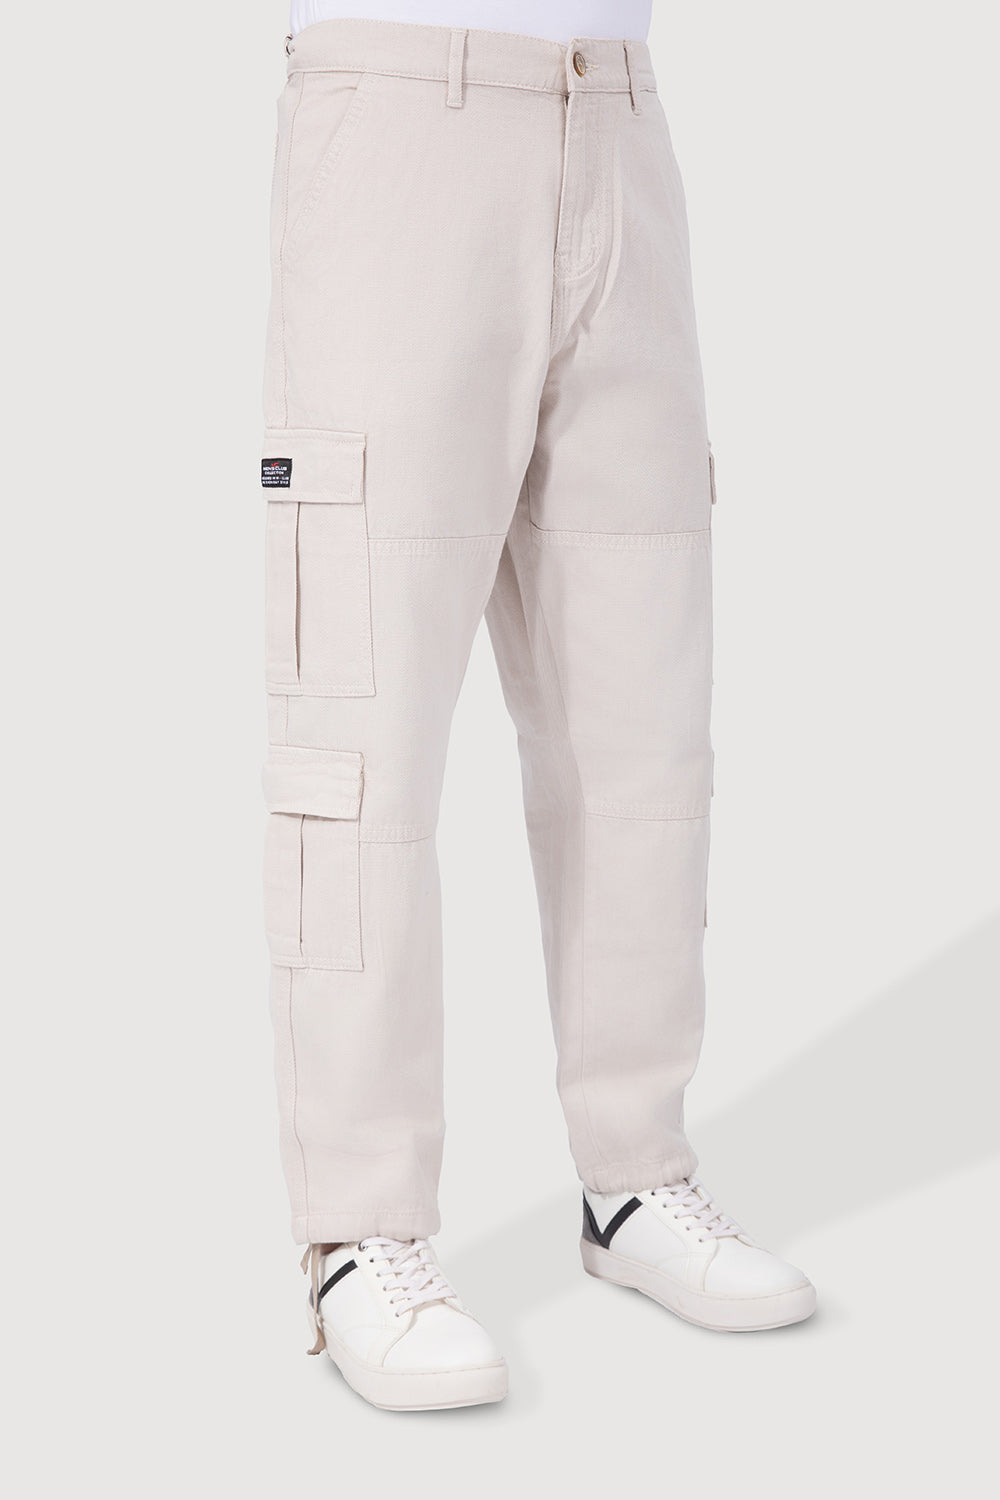 OFF-White Cargo Pants